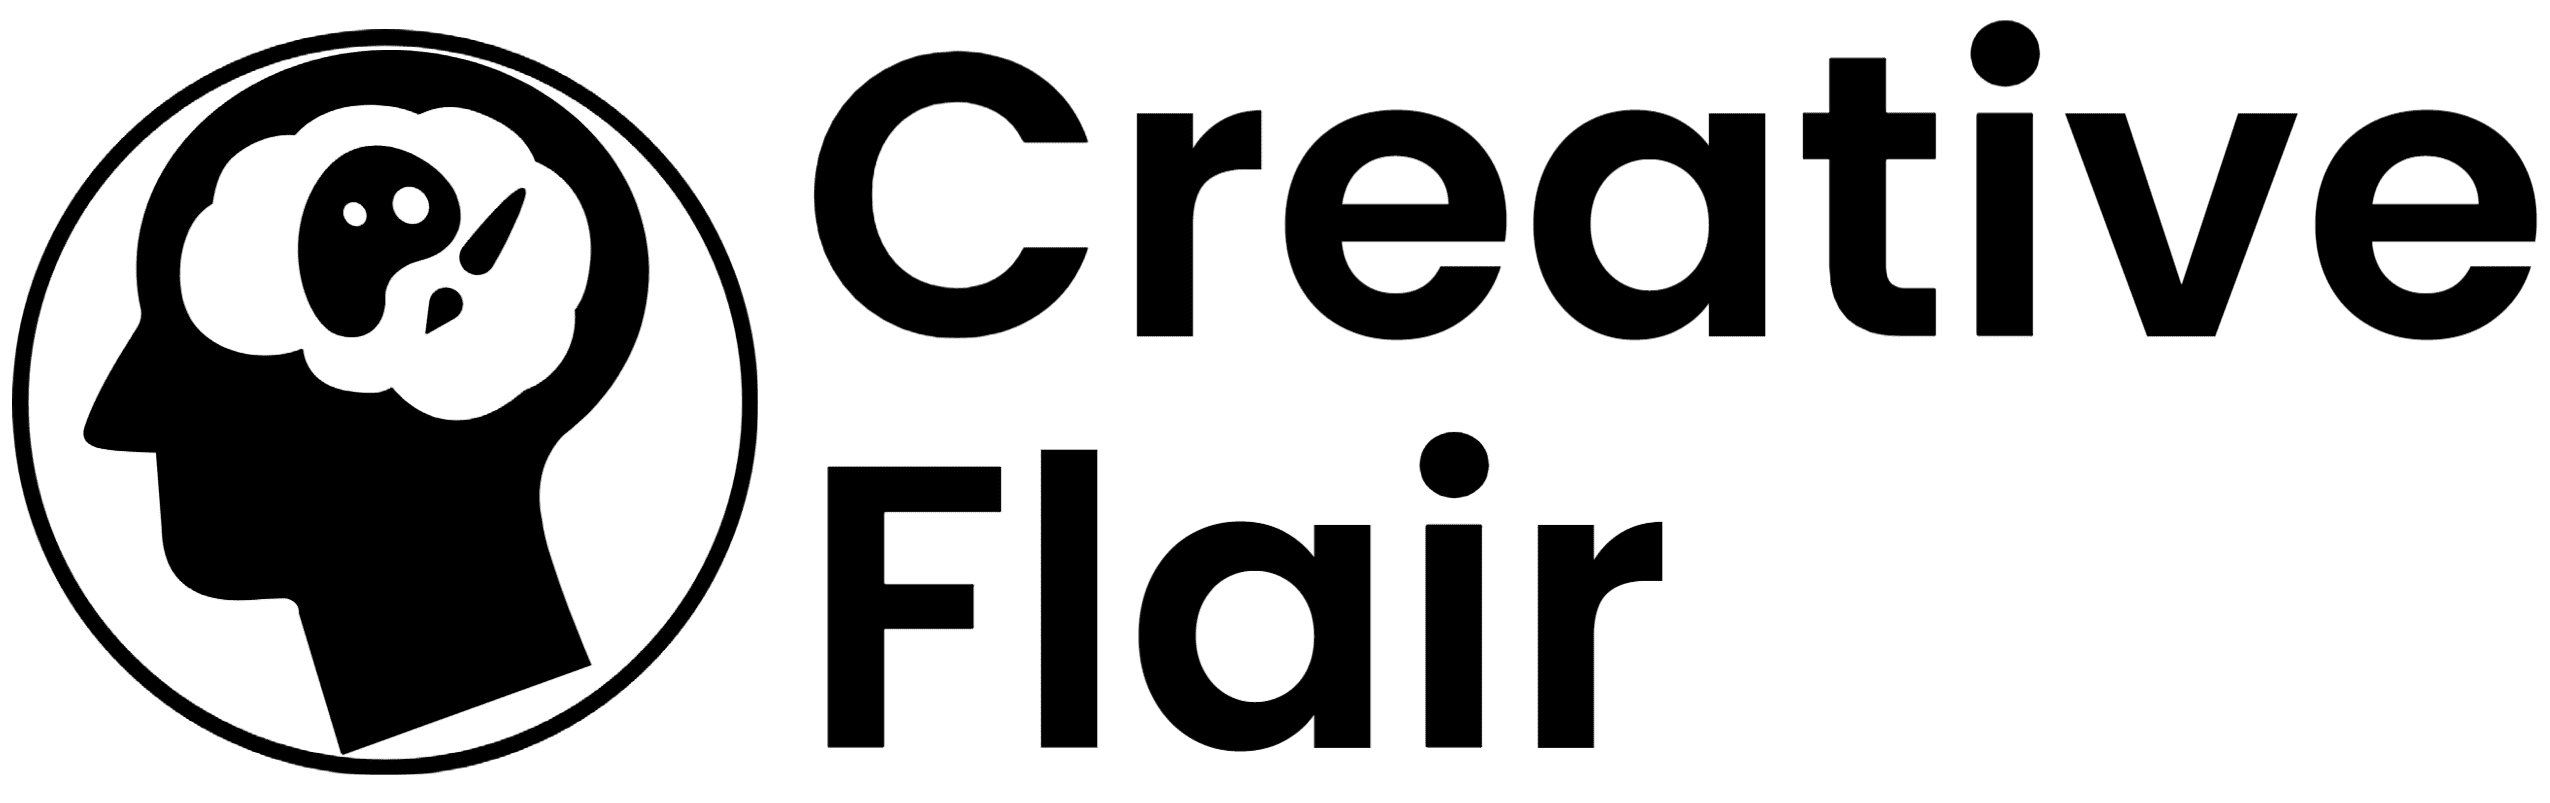 Creative Flair Logo